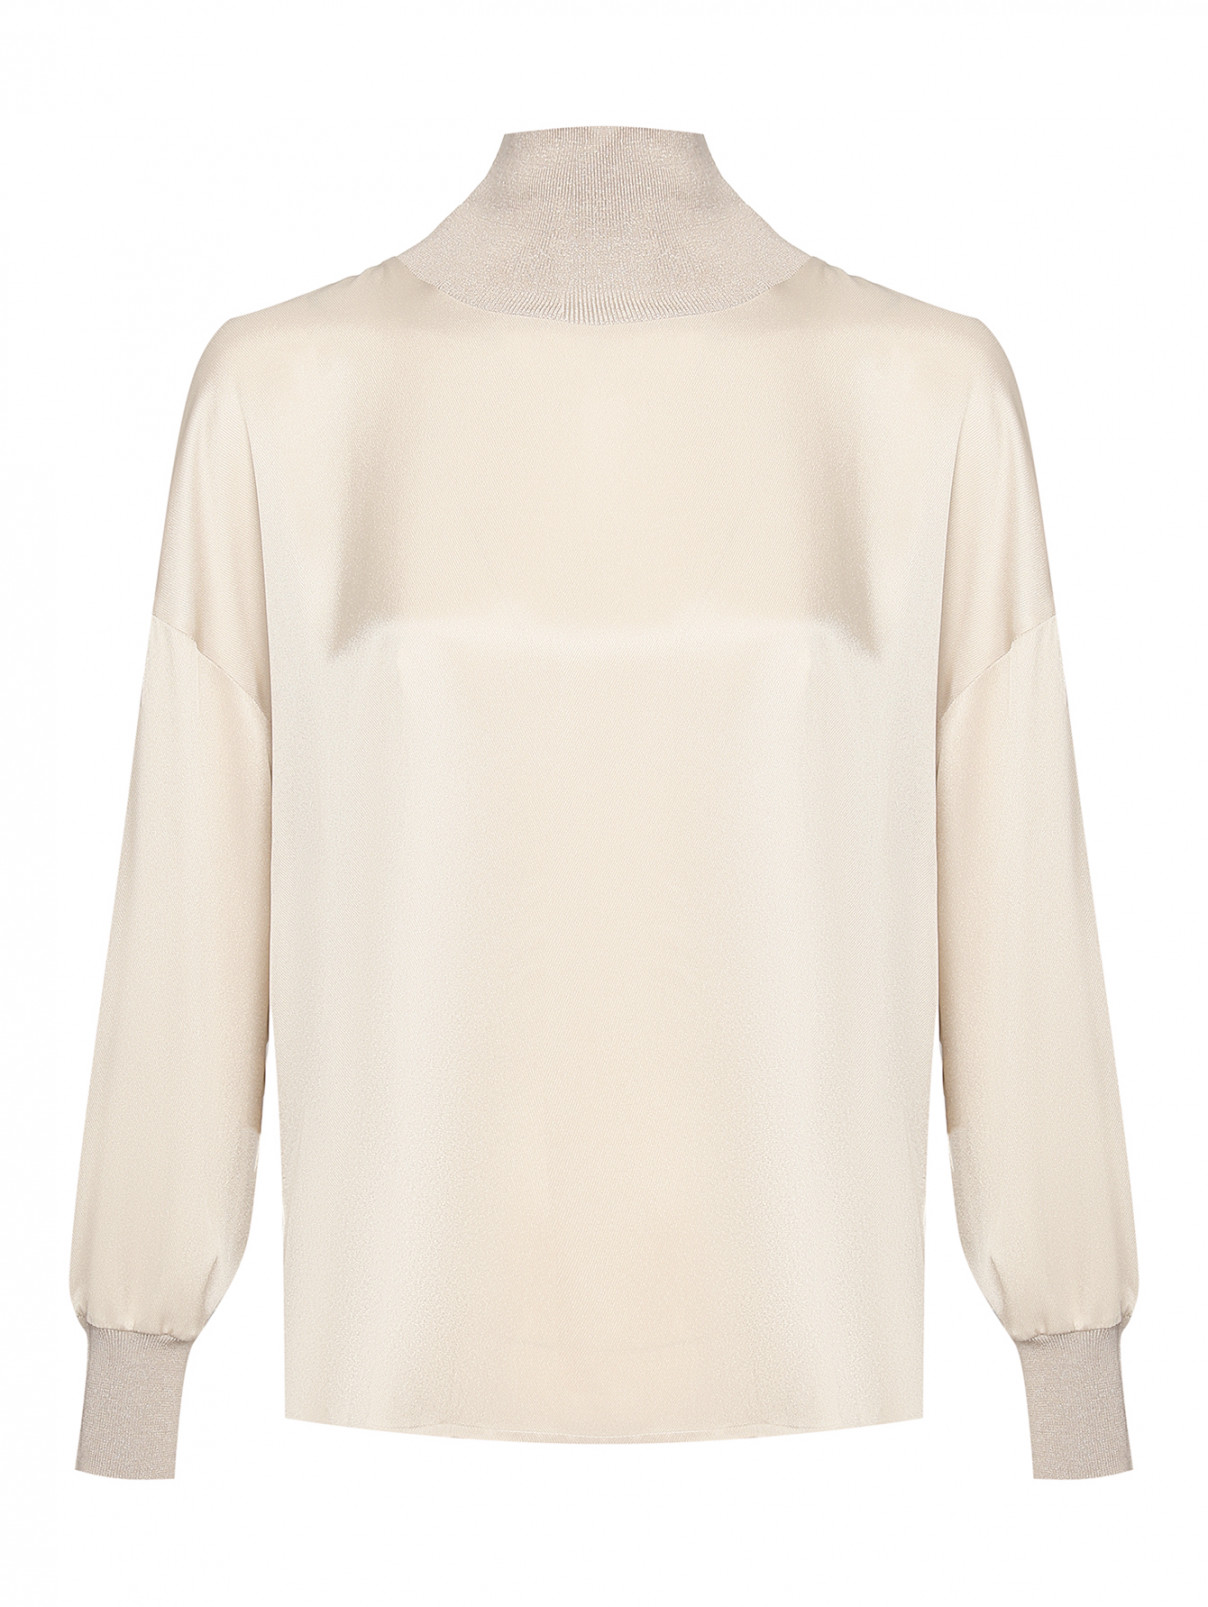 Блуза-водолазка из шелка и шерсти Lorena Antoniazzi  –  Общий вид  – Цвет:  Бежевый